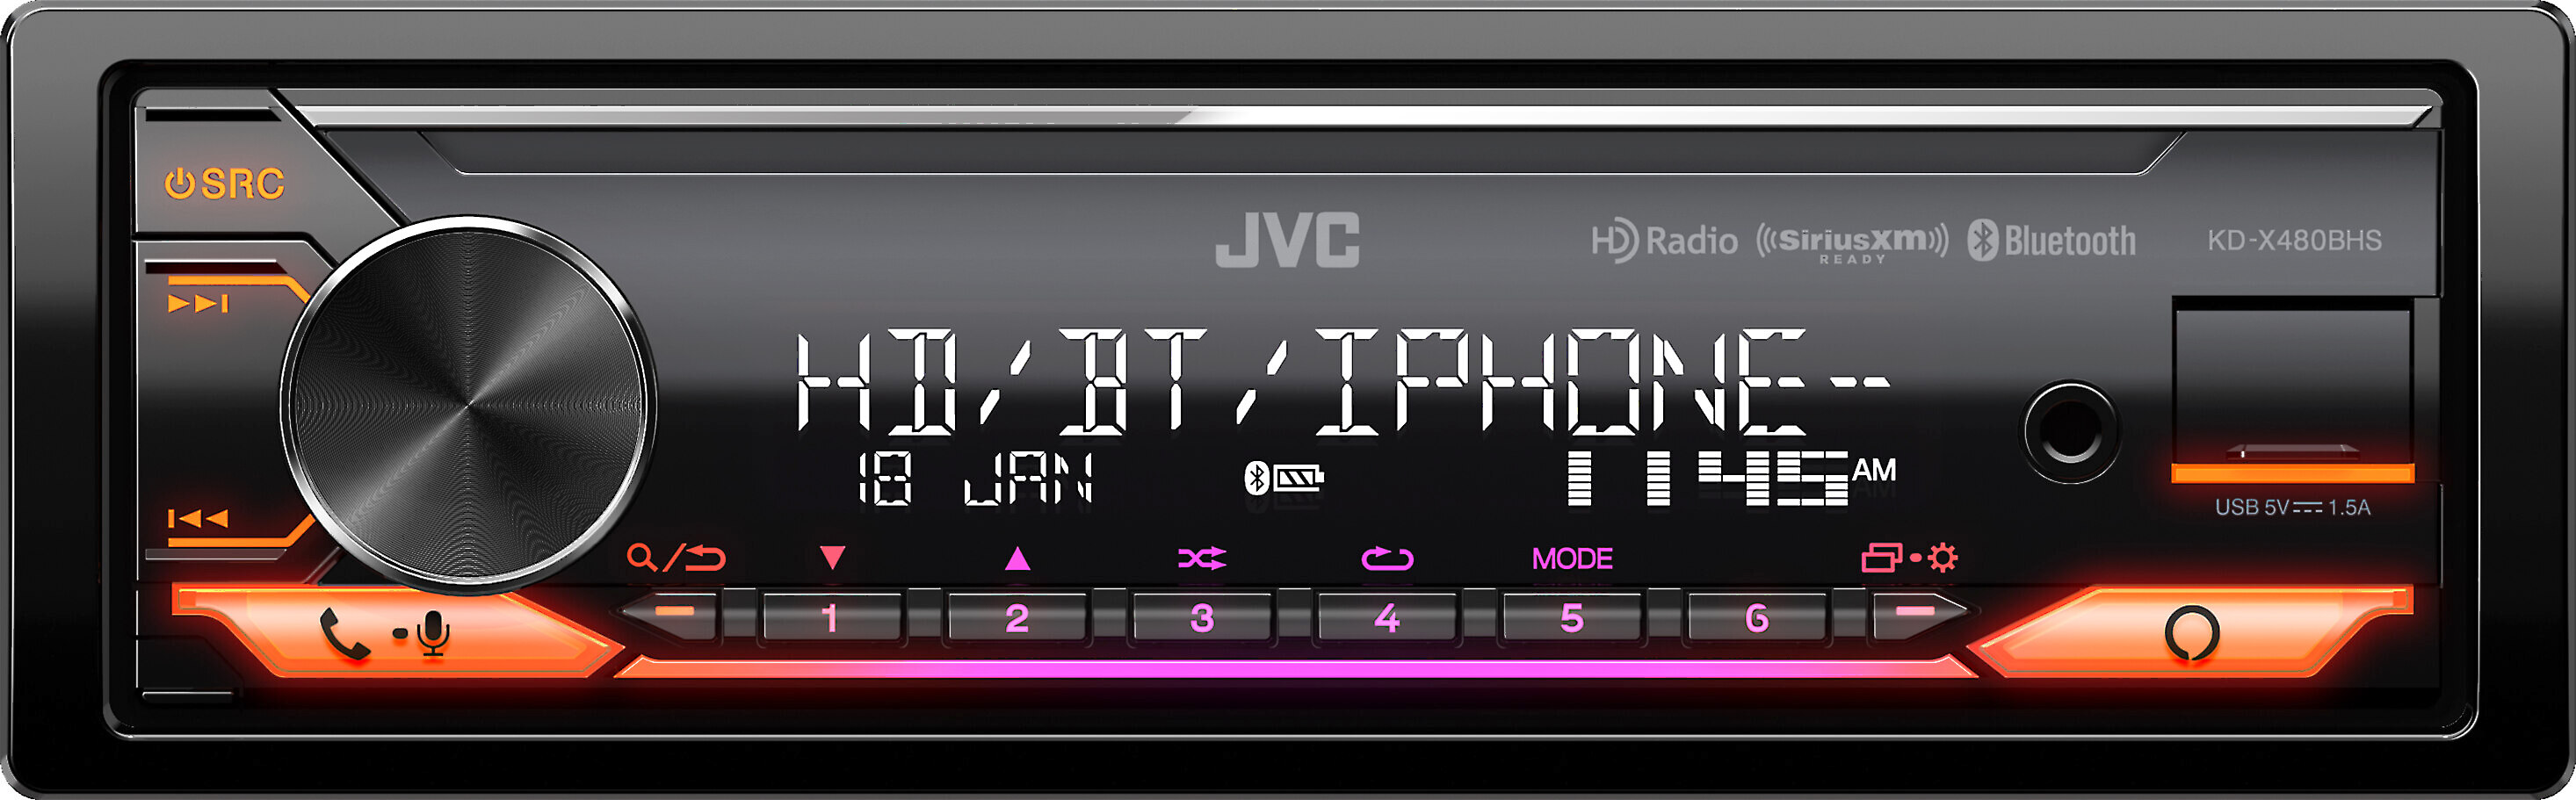 JVC KD-X480BHS Digital Media Receiver Featuring Bluetooth / USB / HD Radio